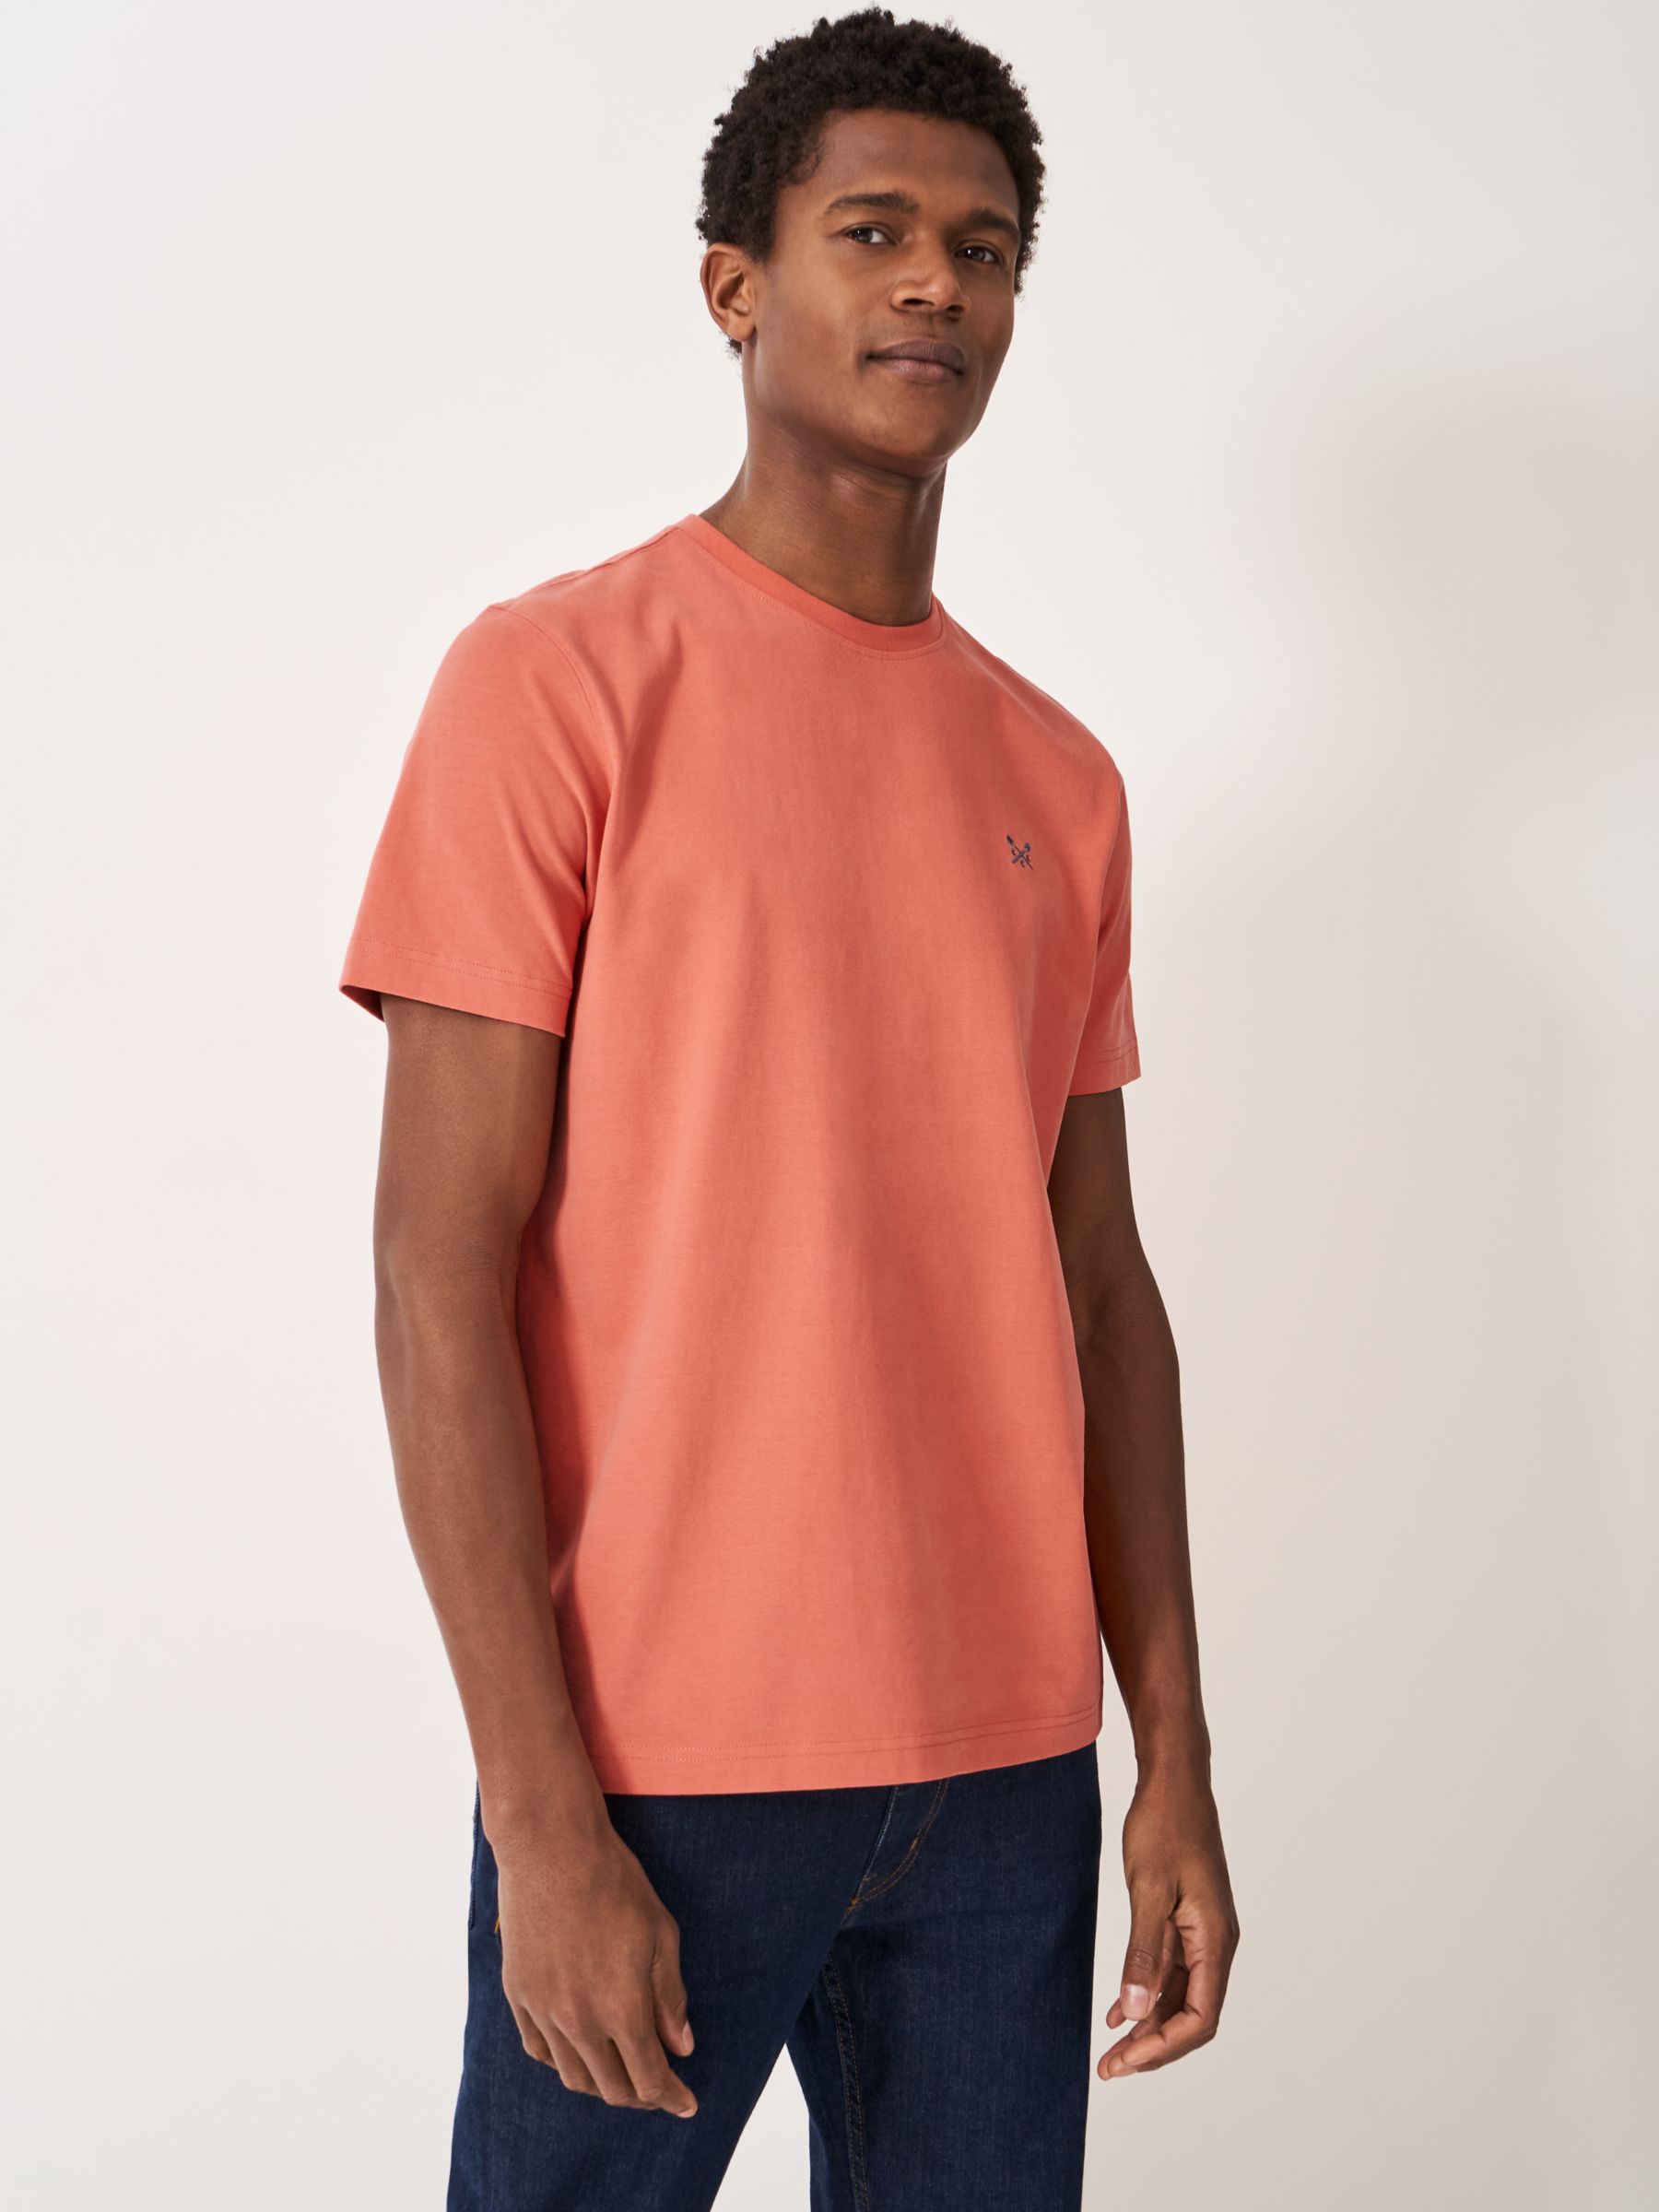 Crew Clothing Crew Neck Cotton T-Shirt, Coral Orange, L